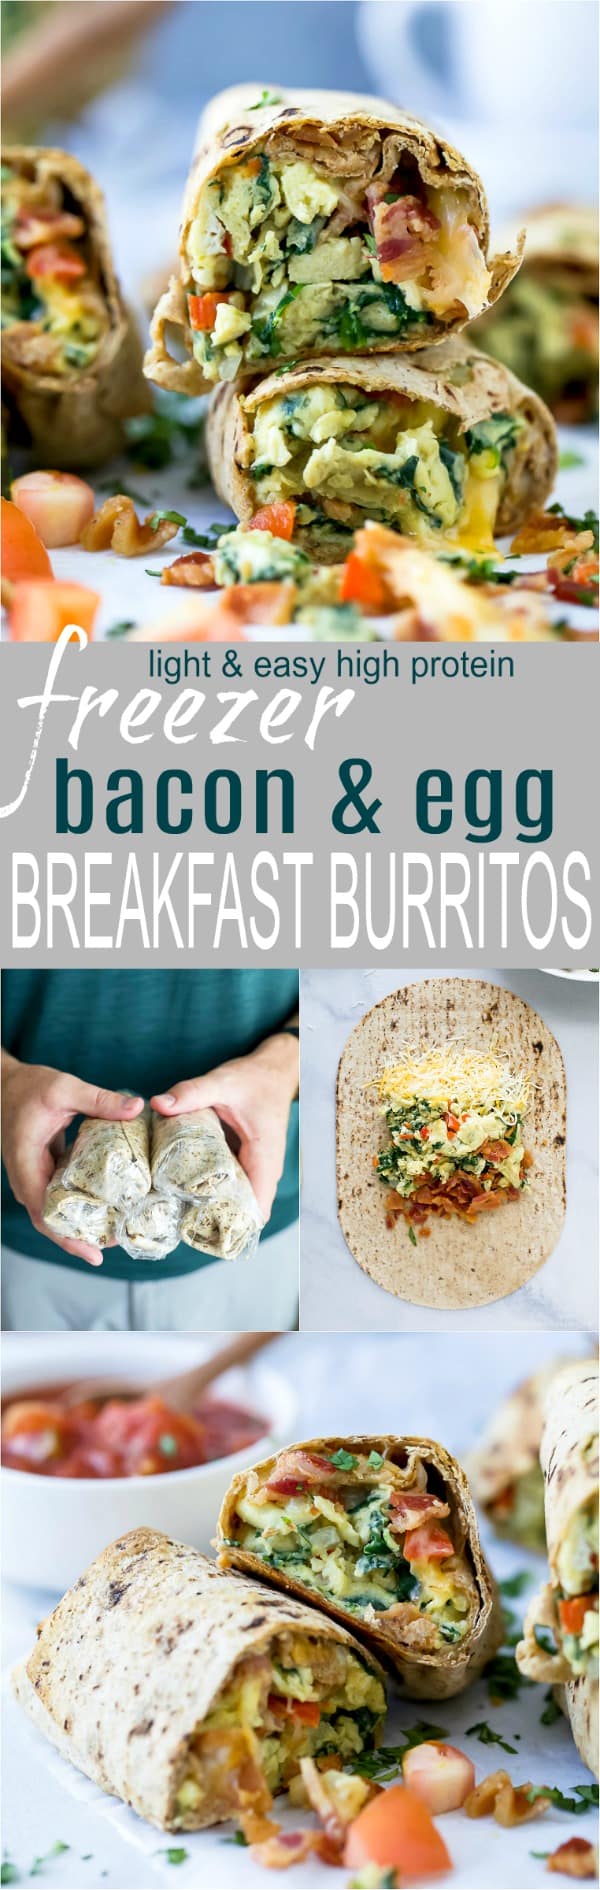 Recipe collage for Freezer Bacon & Egg Breakfast Burritos